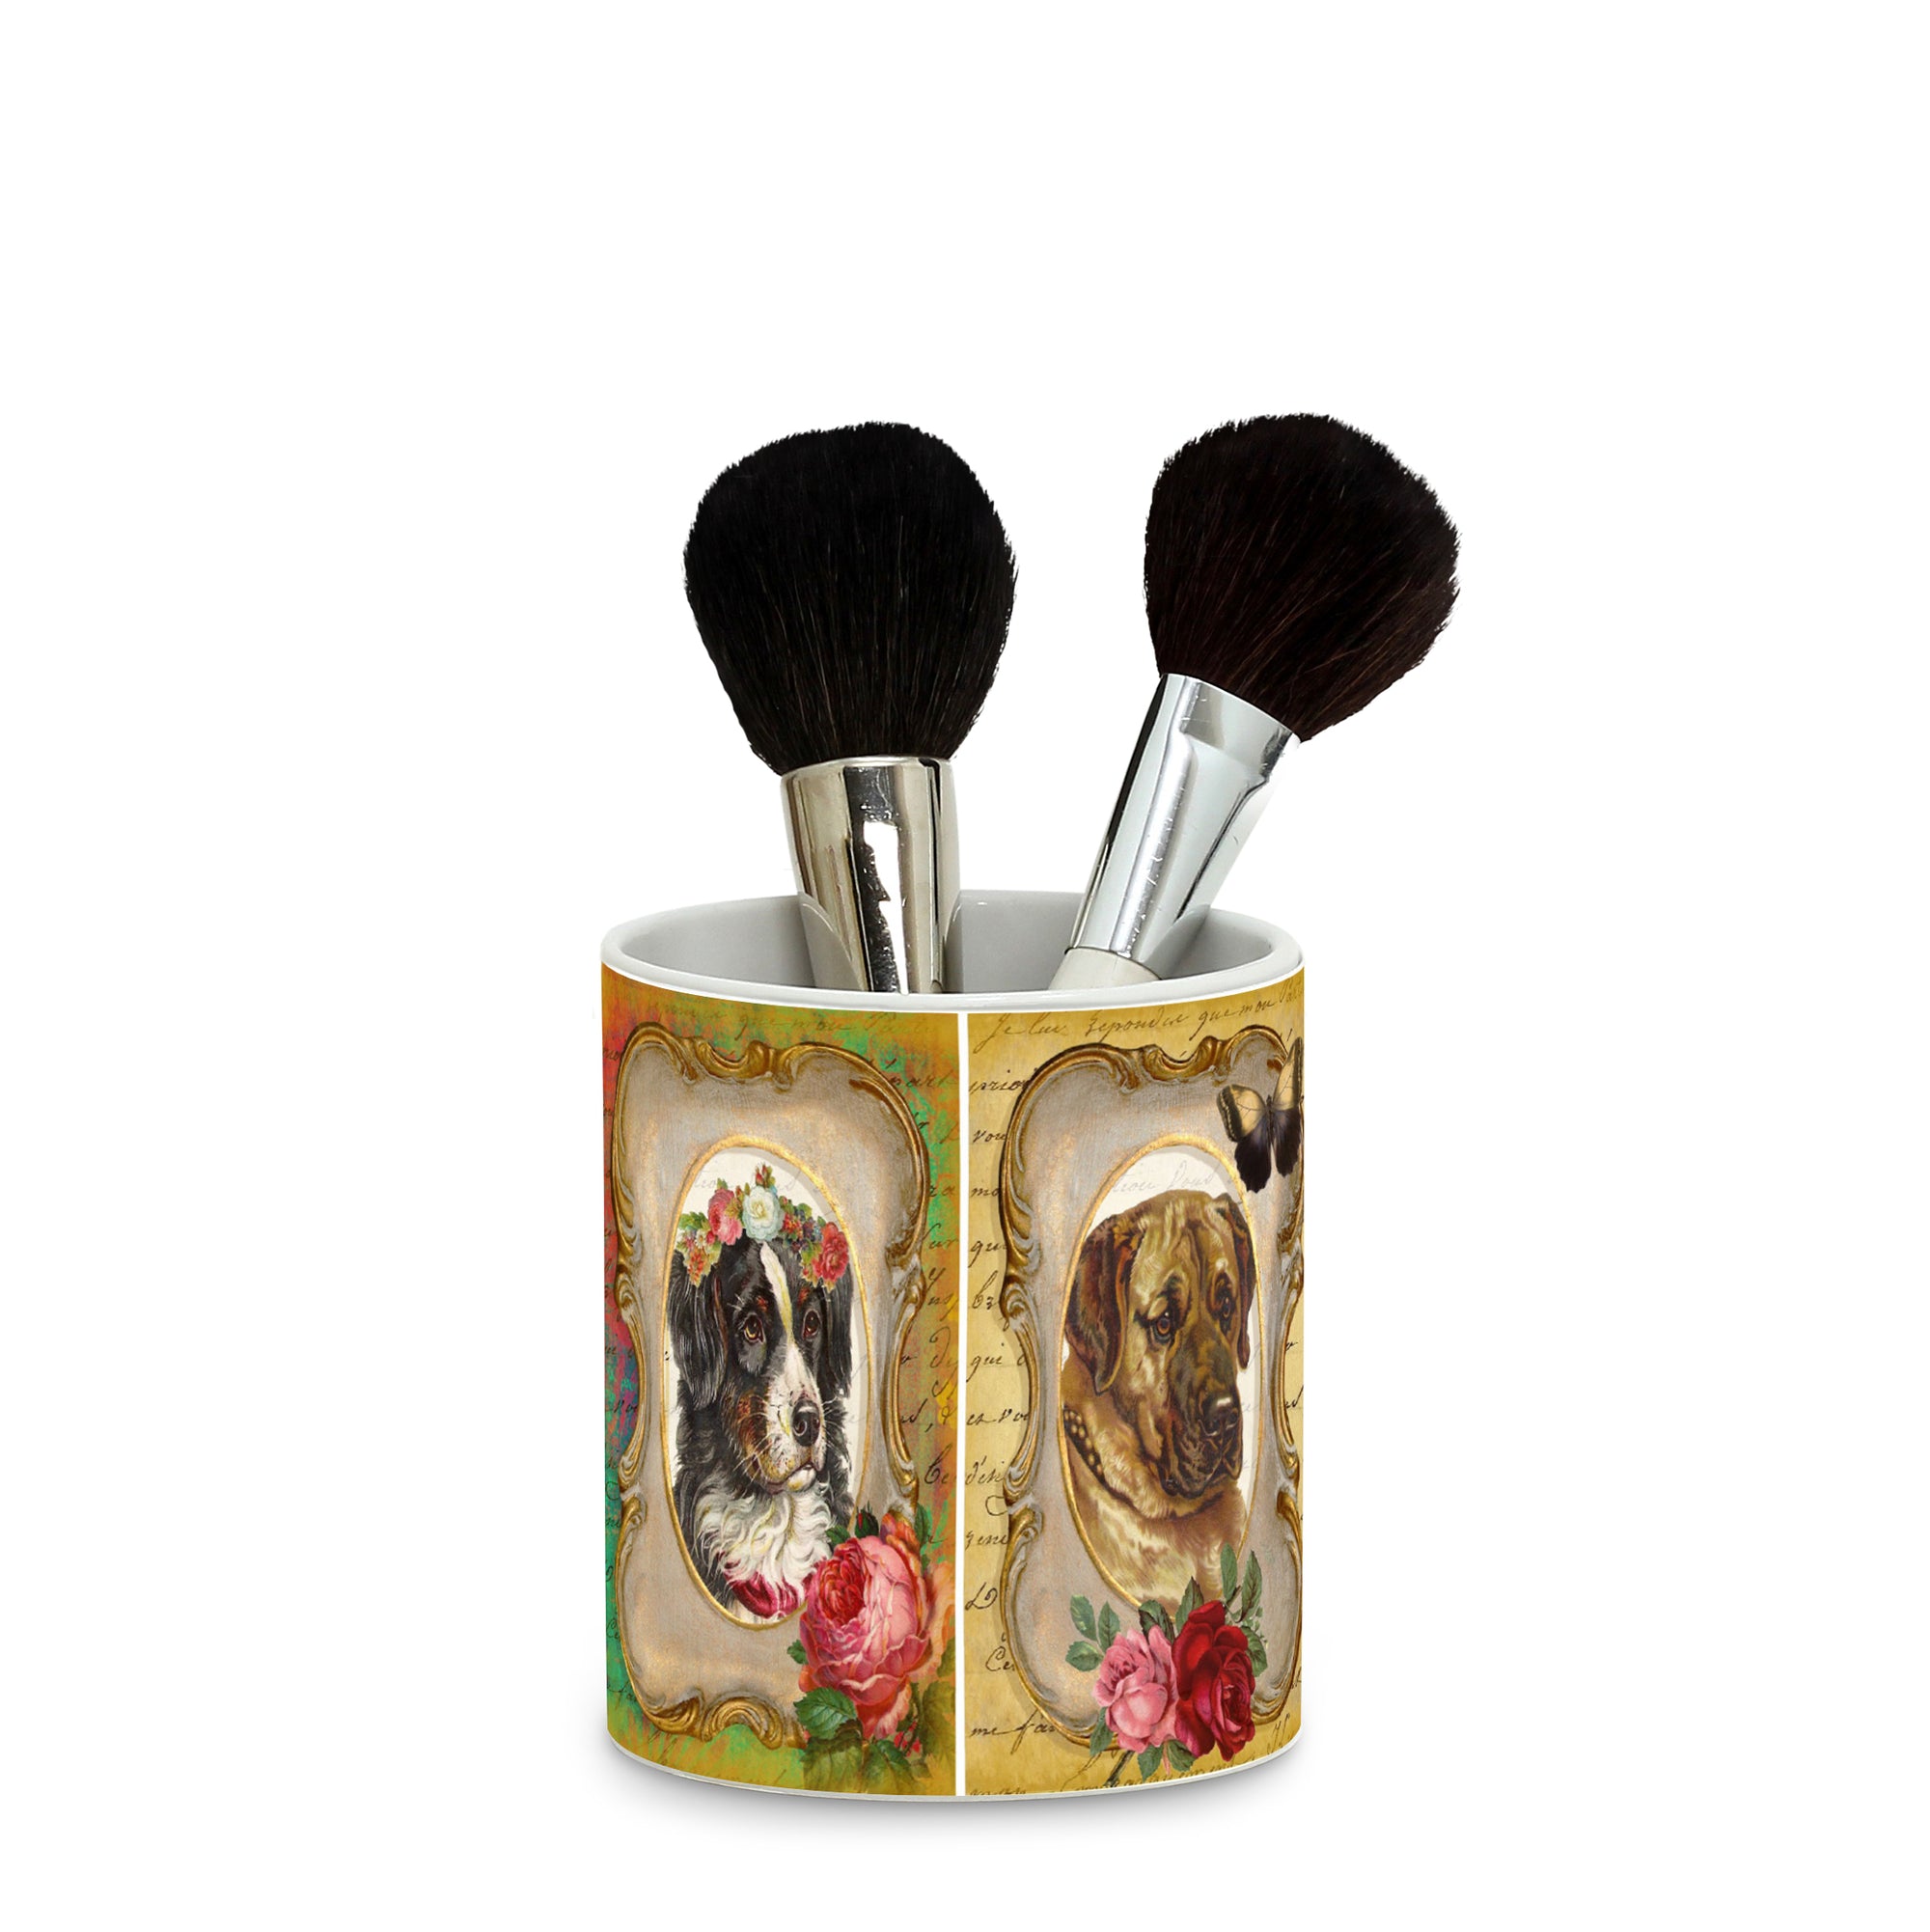 SUBLIMART: Pets of Love - Multi Use Tumbler - Dogs (Design #ANP04) - Artistica.com